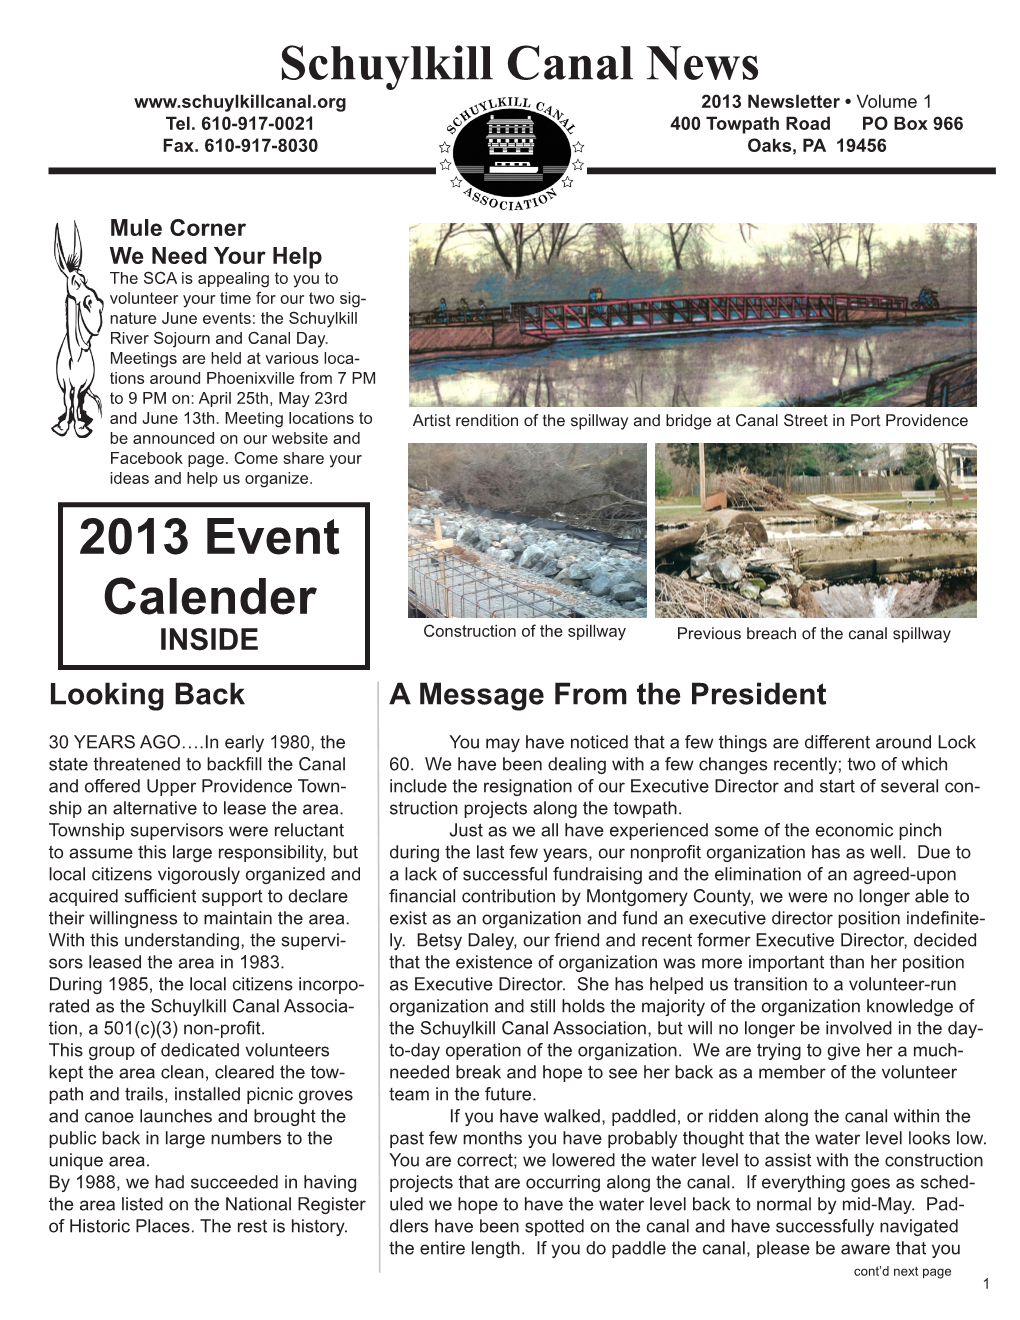 Schuylkill Canal News 2013 Event Calender